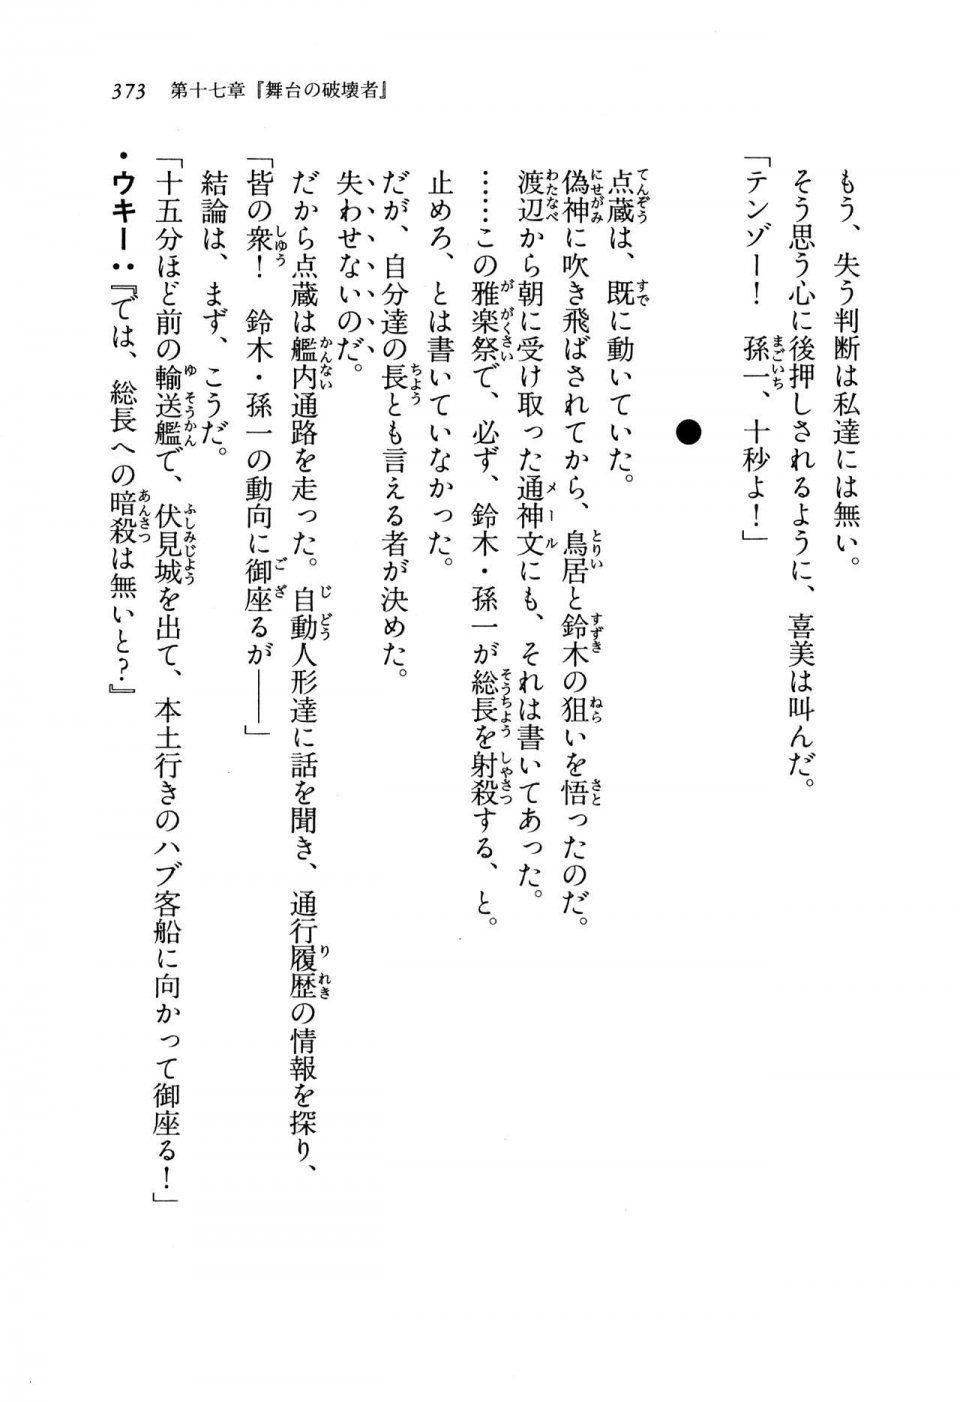 Kyoukai Senjou no Horizon BD Special Mininovel Vol 8(4B) - Photo #377